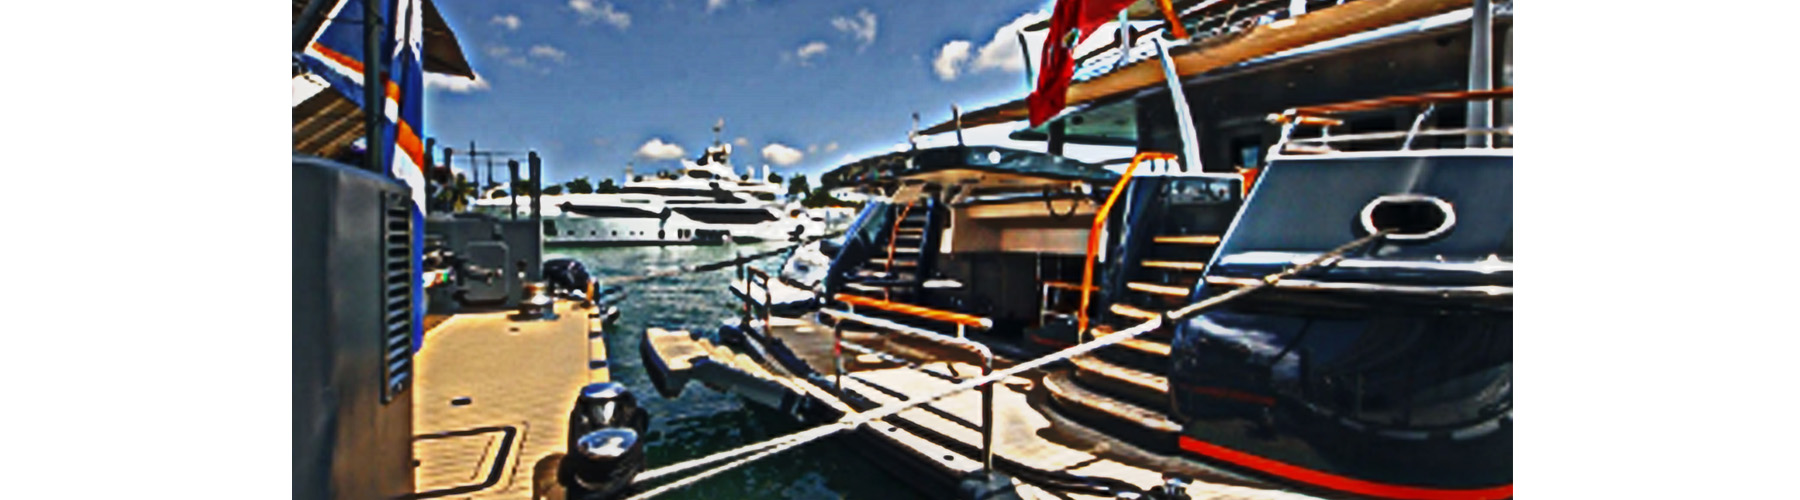 Miami International Boat Show with Intrinsic Yacht & Ship